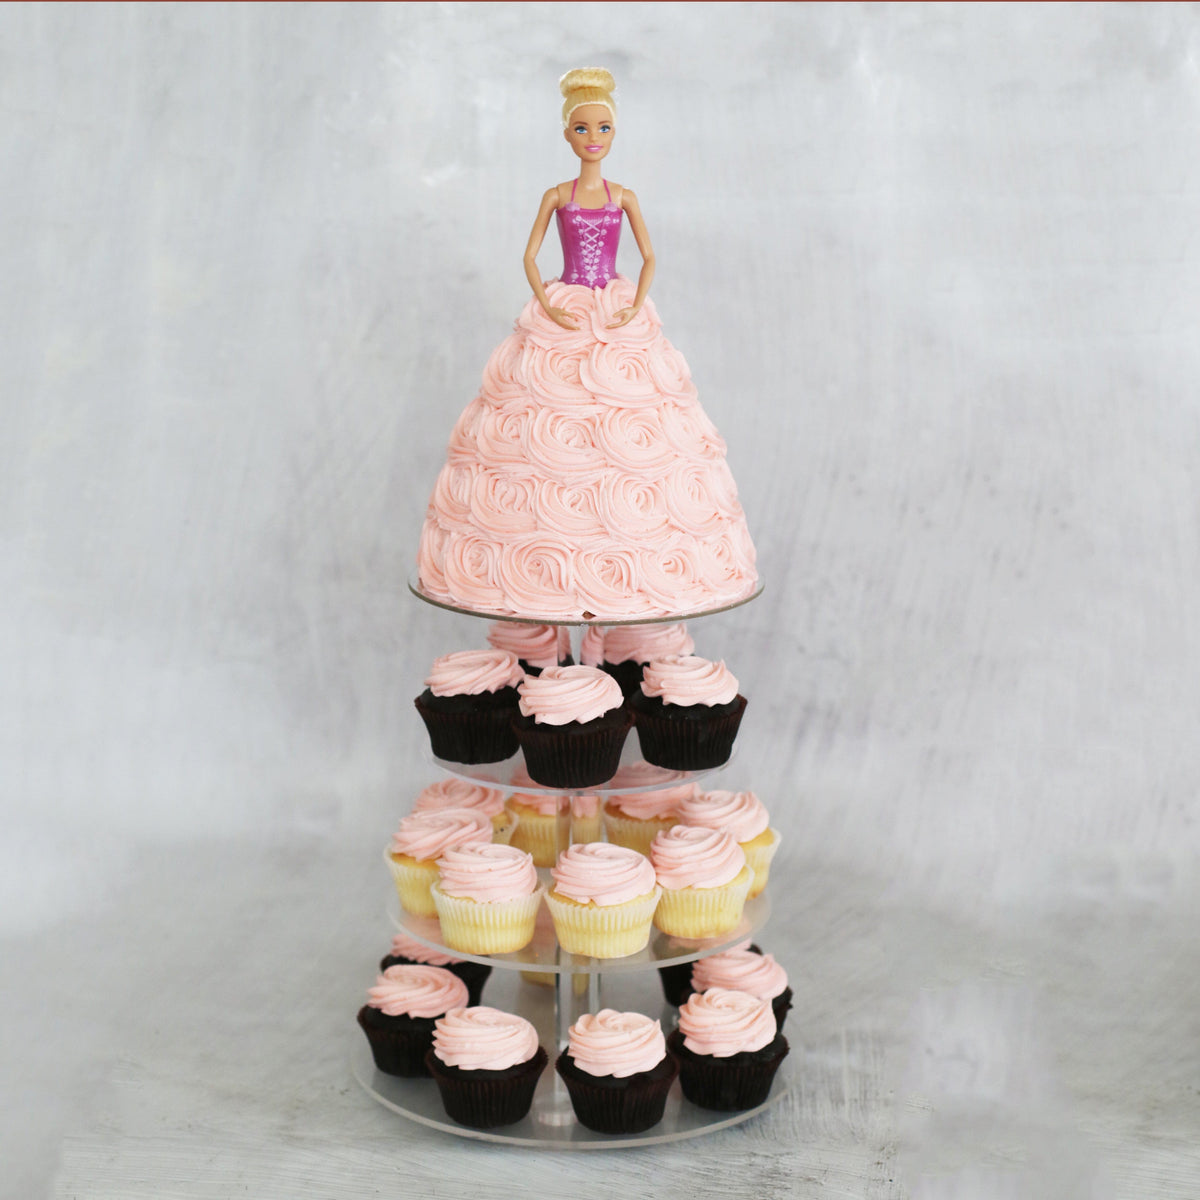 Ballerina Sophie Deluxe Tower Cakes The Cupcake Queens 